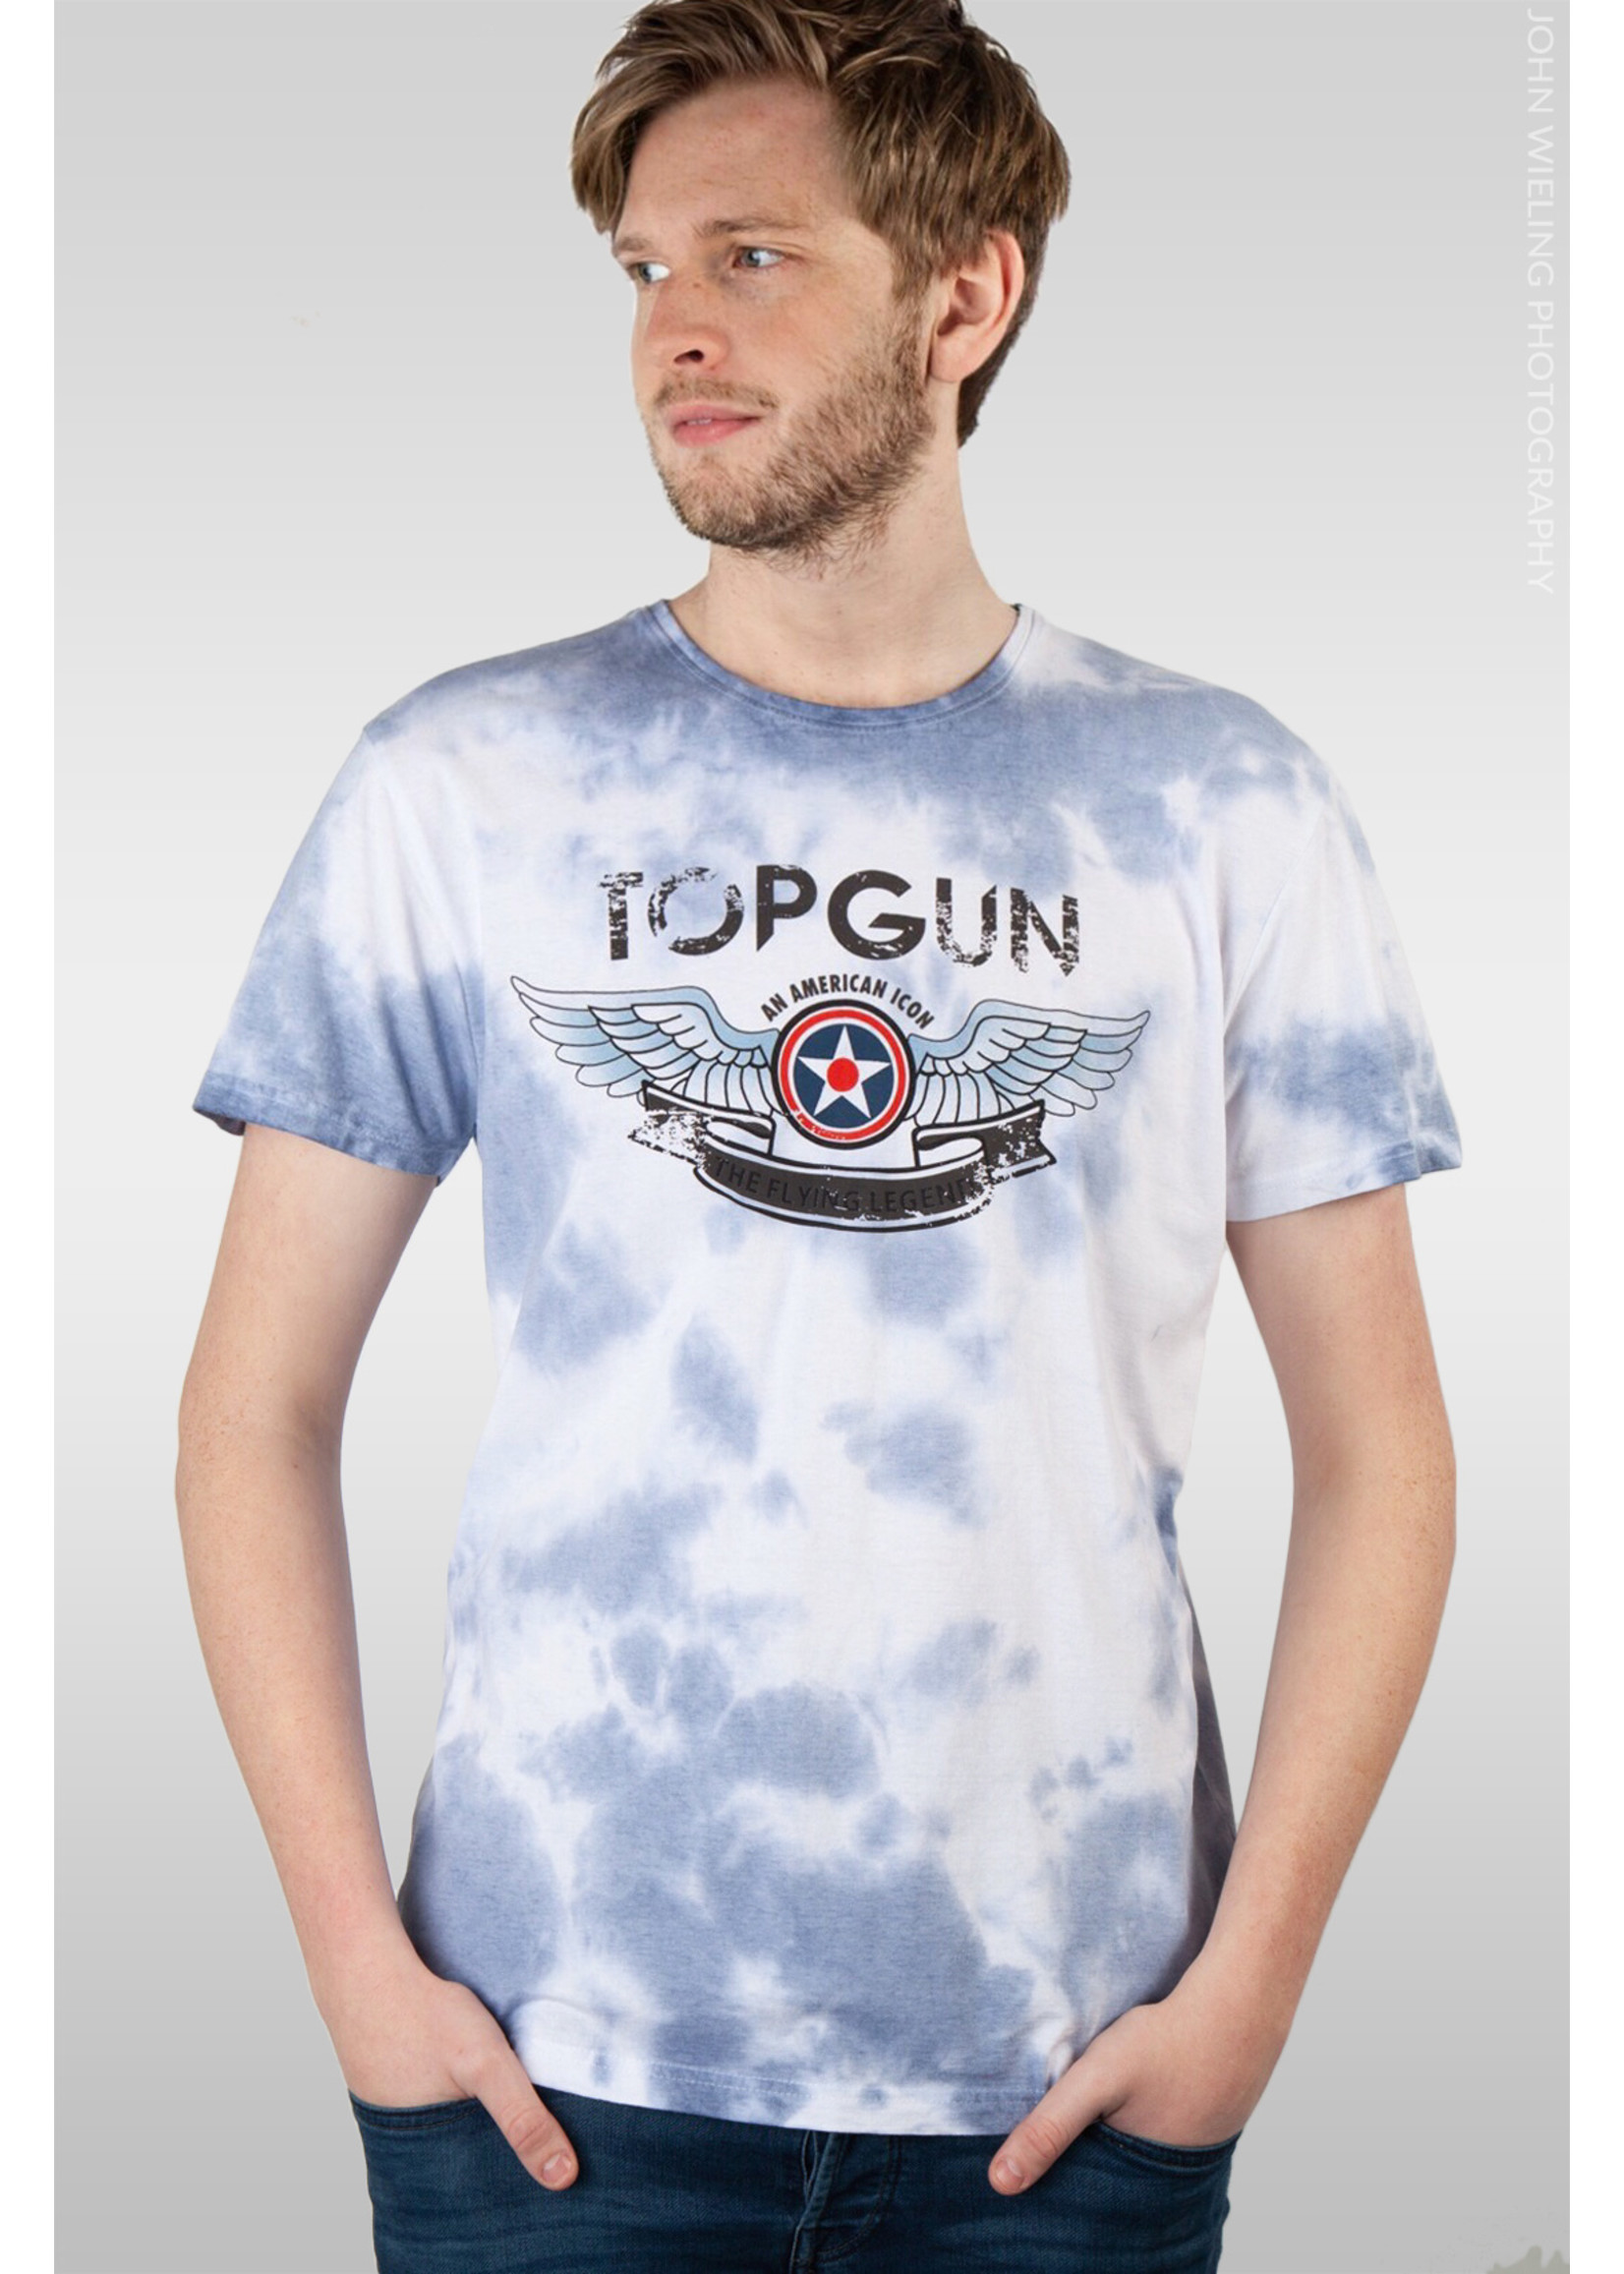 Top Gun T-Shirt Top Gun ® «American Icon» Camouflage Marine